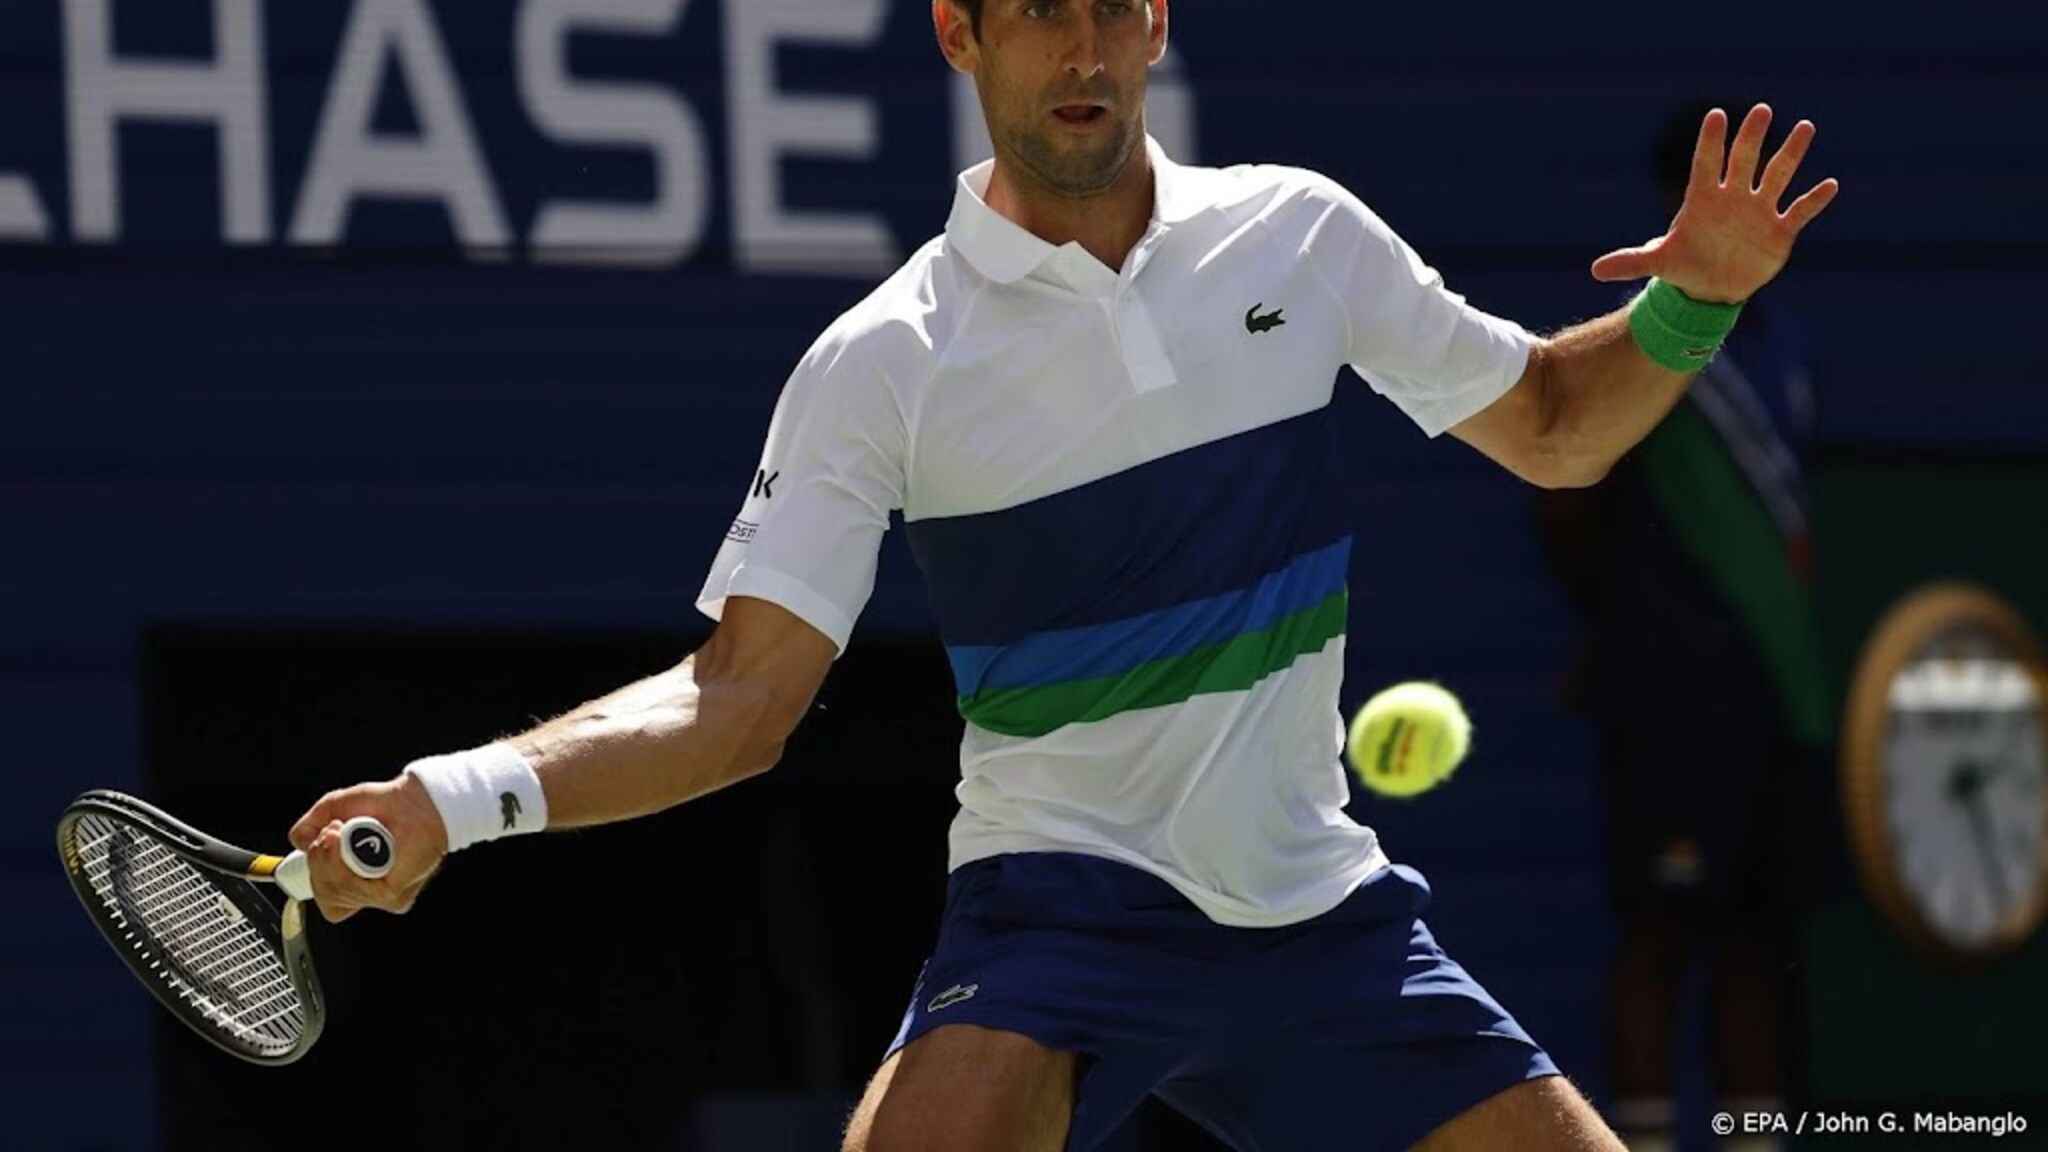 Djokovic beat Nishikori to the fourth round of the US Open